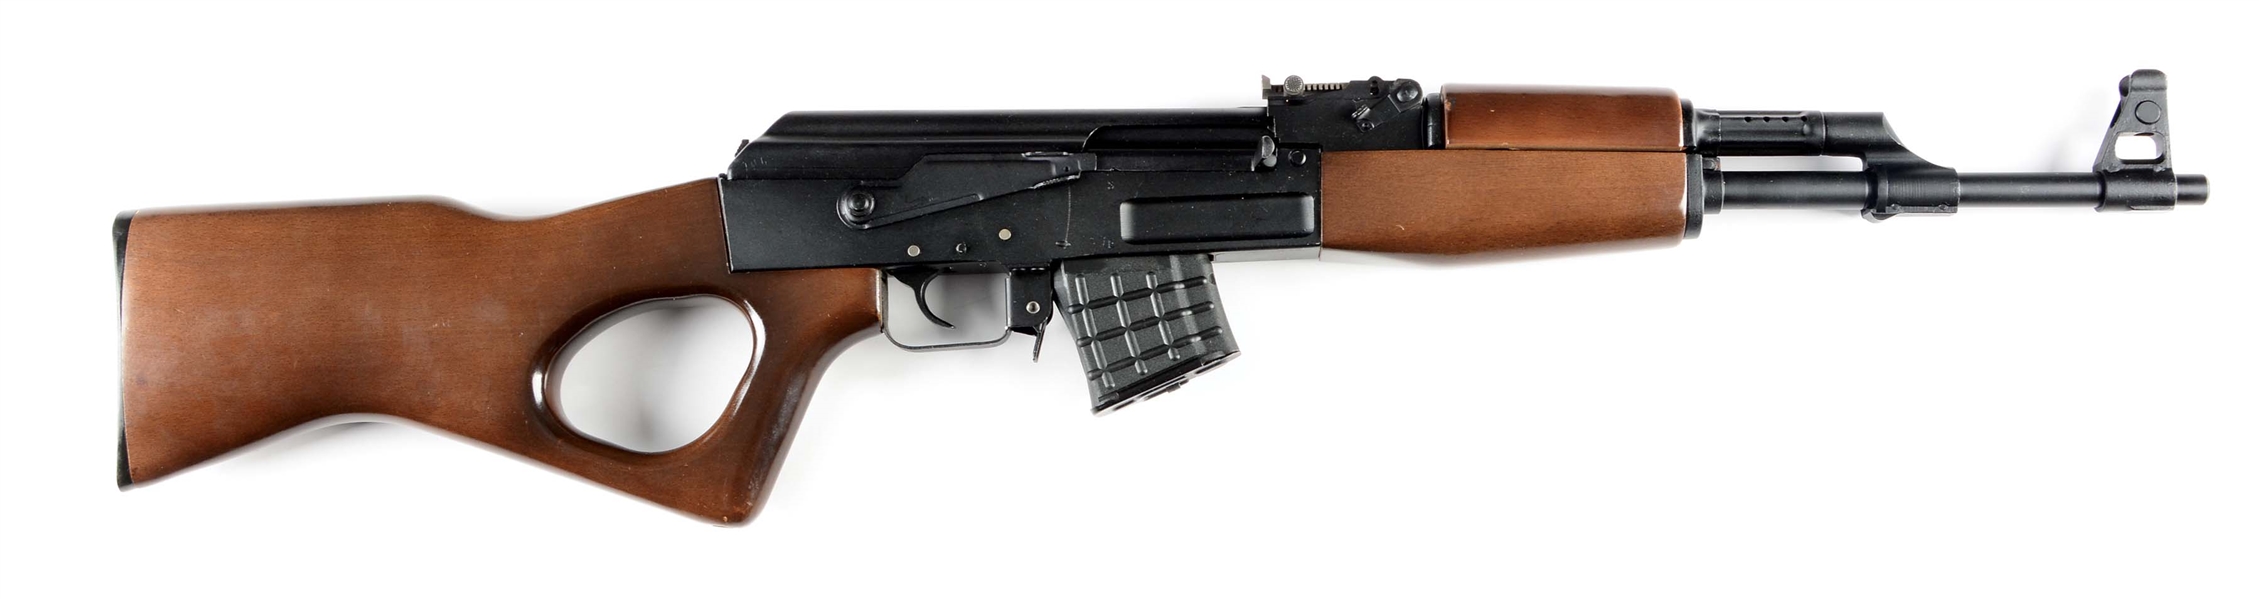 (M) ARSENAL SA93 AK-47 7.62X39 SEMI AUTOMATIC RIFLE.